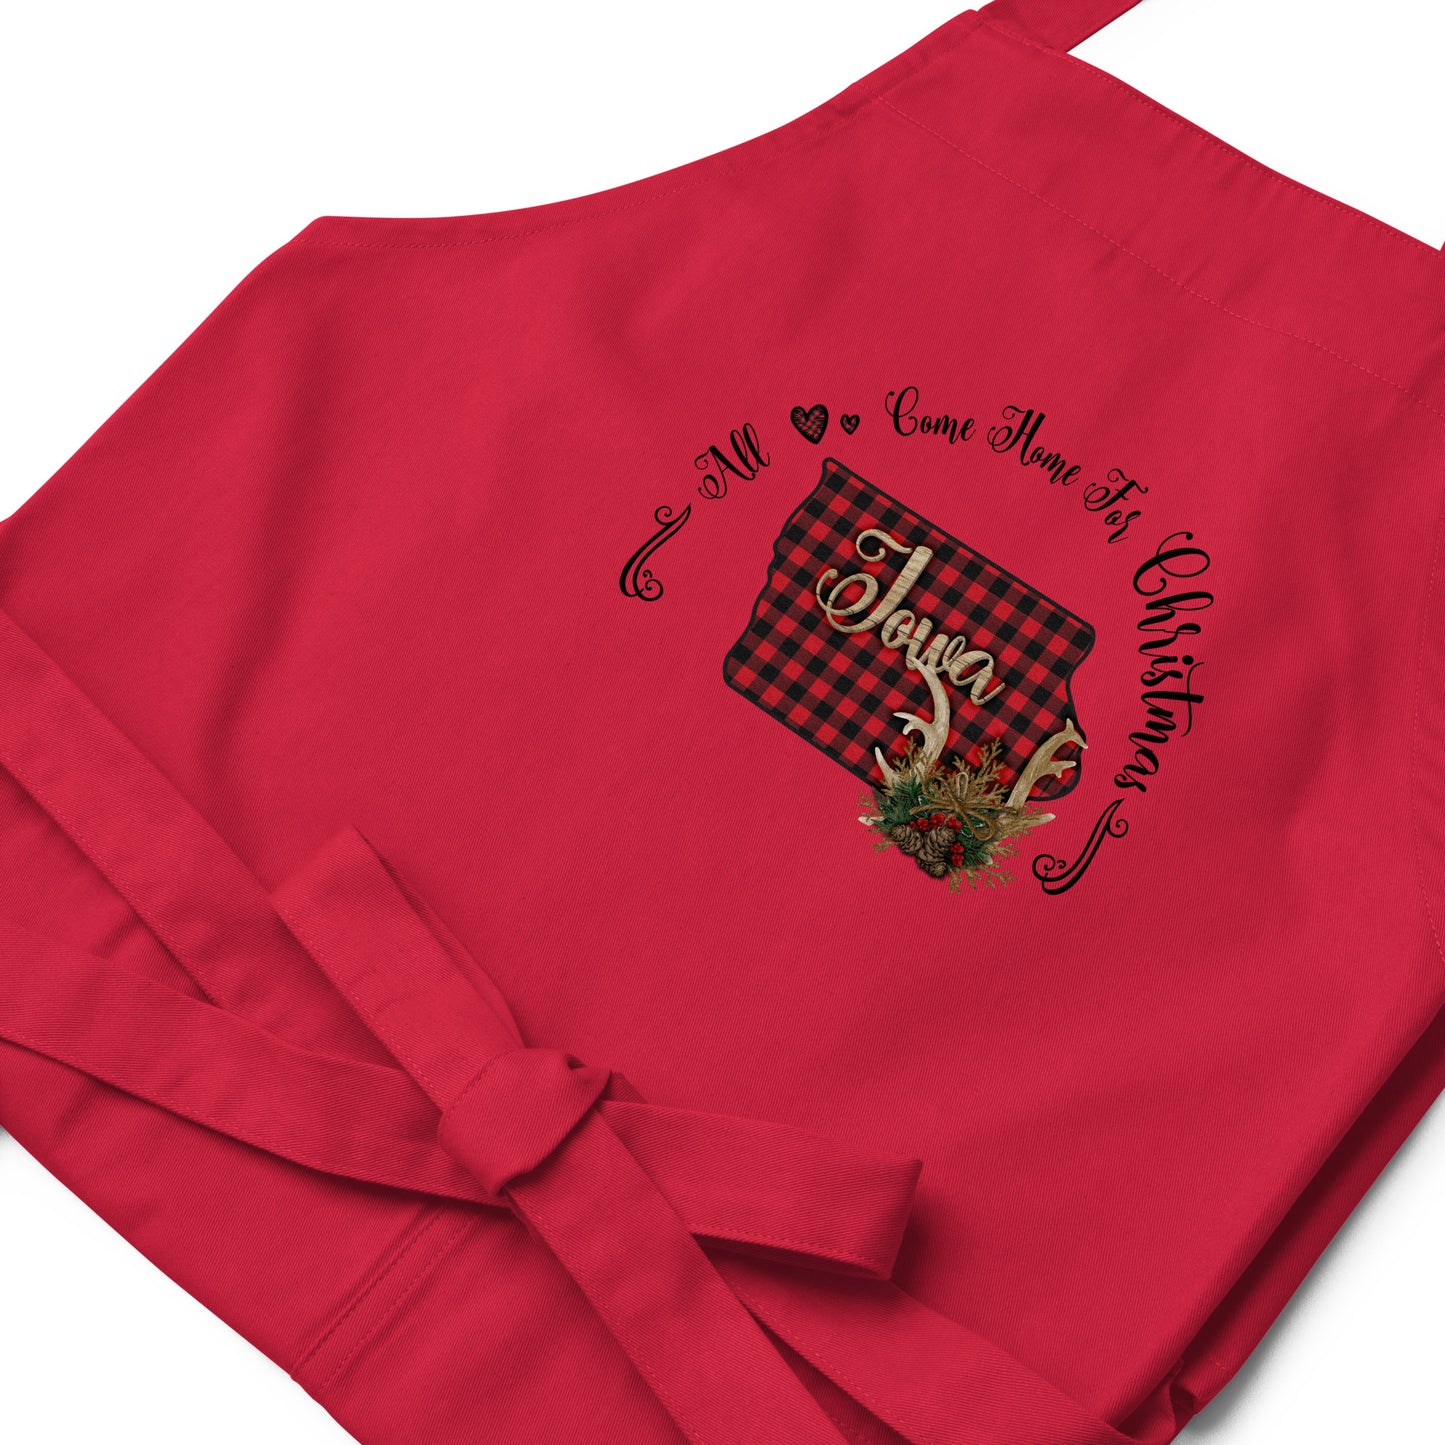 Iowa All Come Home for Christmas Organic cotton apron